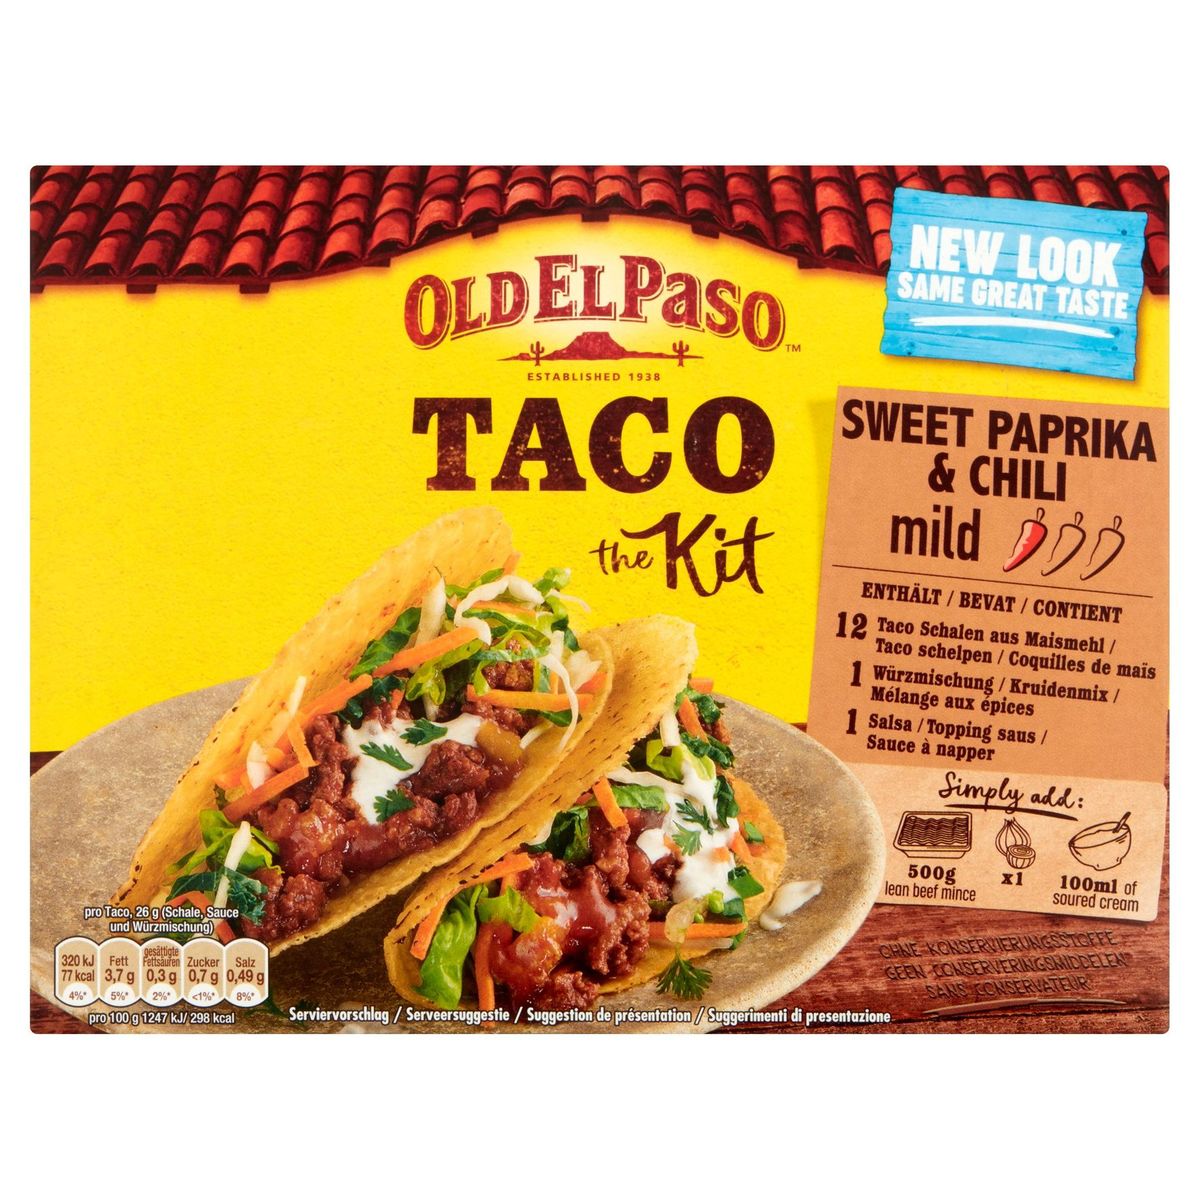 Old El Paso Taco the Kit Sweet Paprika & Chili 308 g